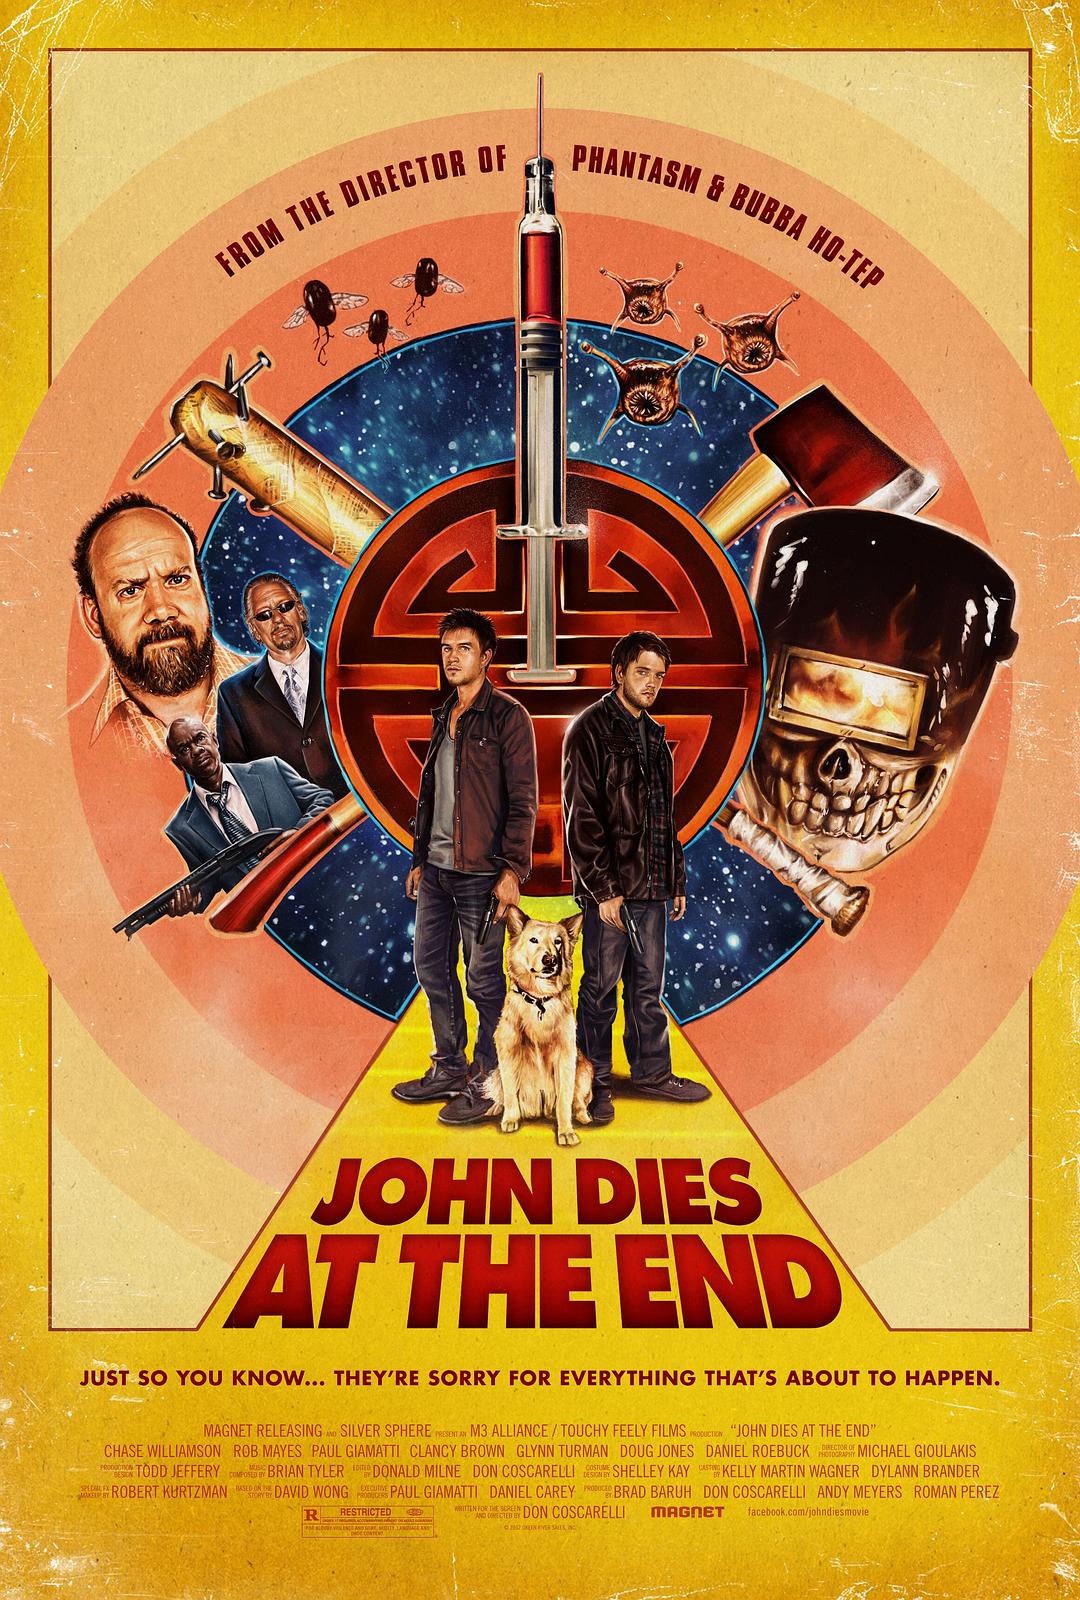 最后约翰死了 John.Dies.at.the.End.2012.LIMITED.1080p.BluRay.x264-GECKOS 7.65GB